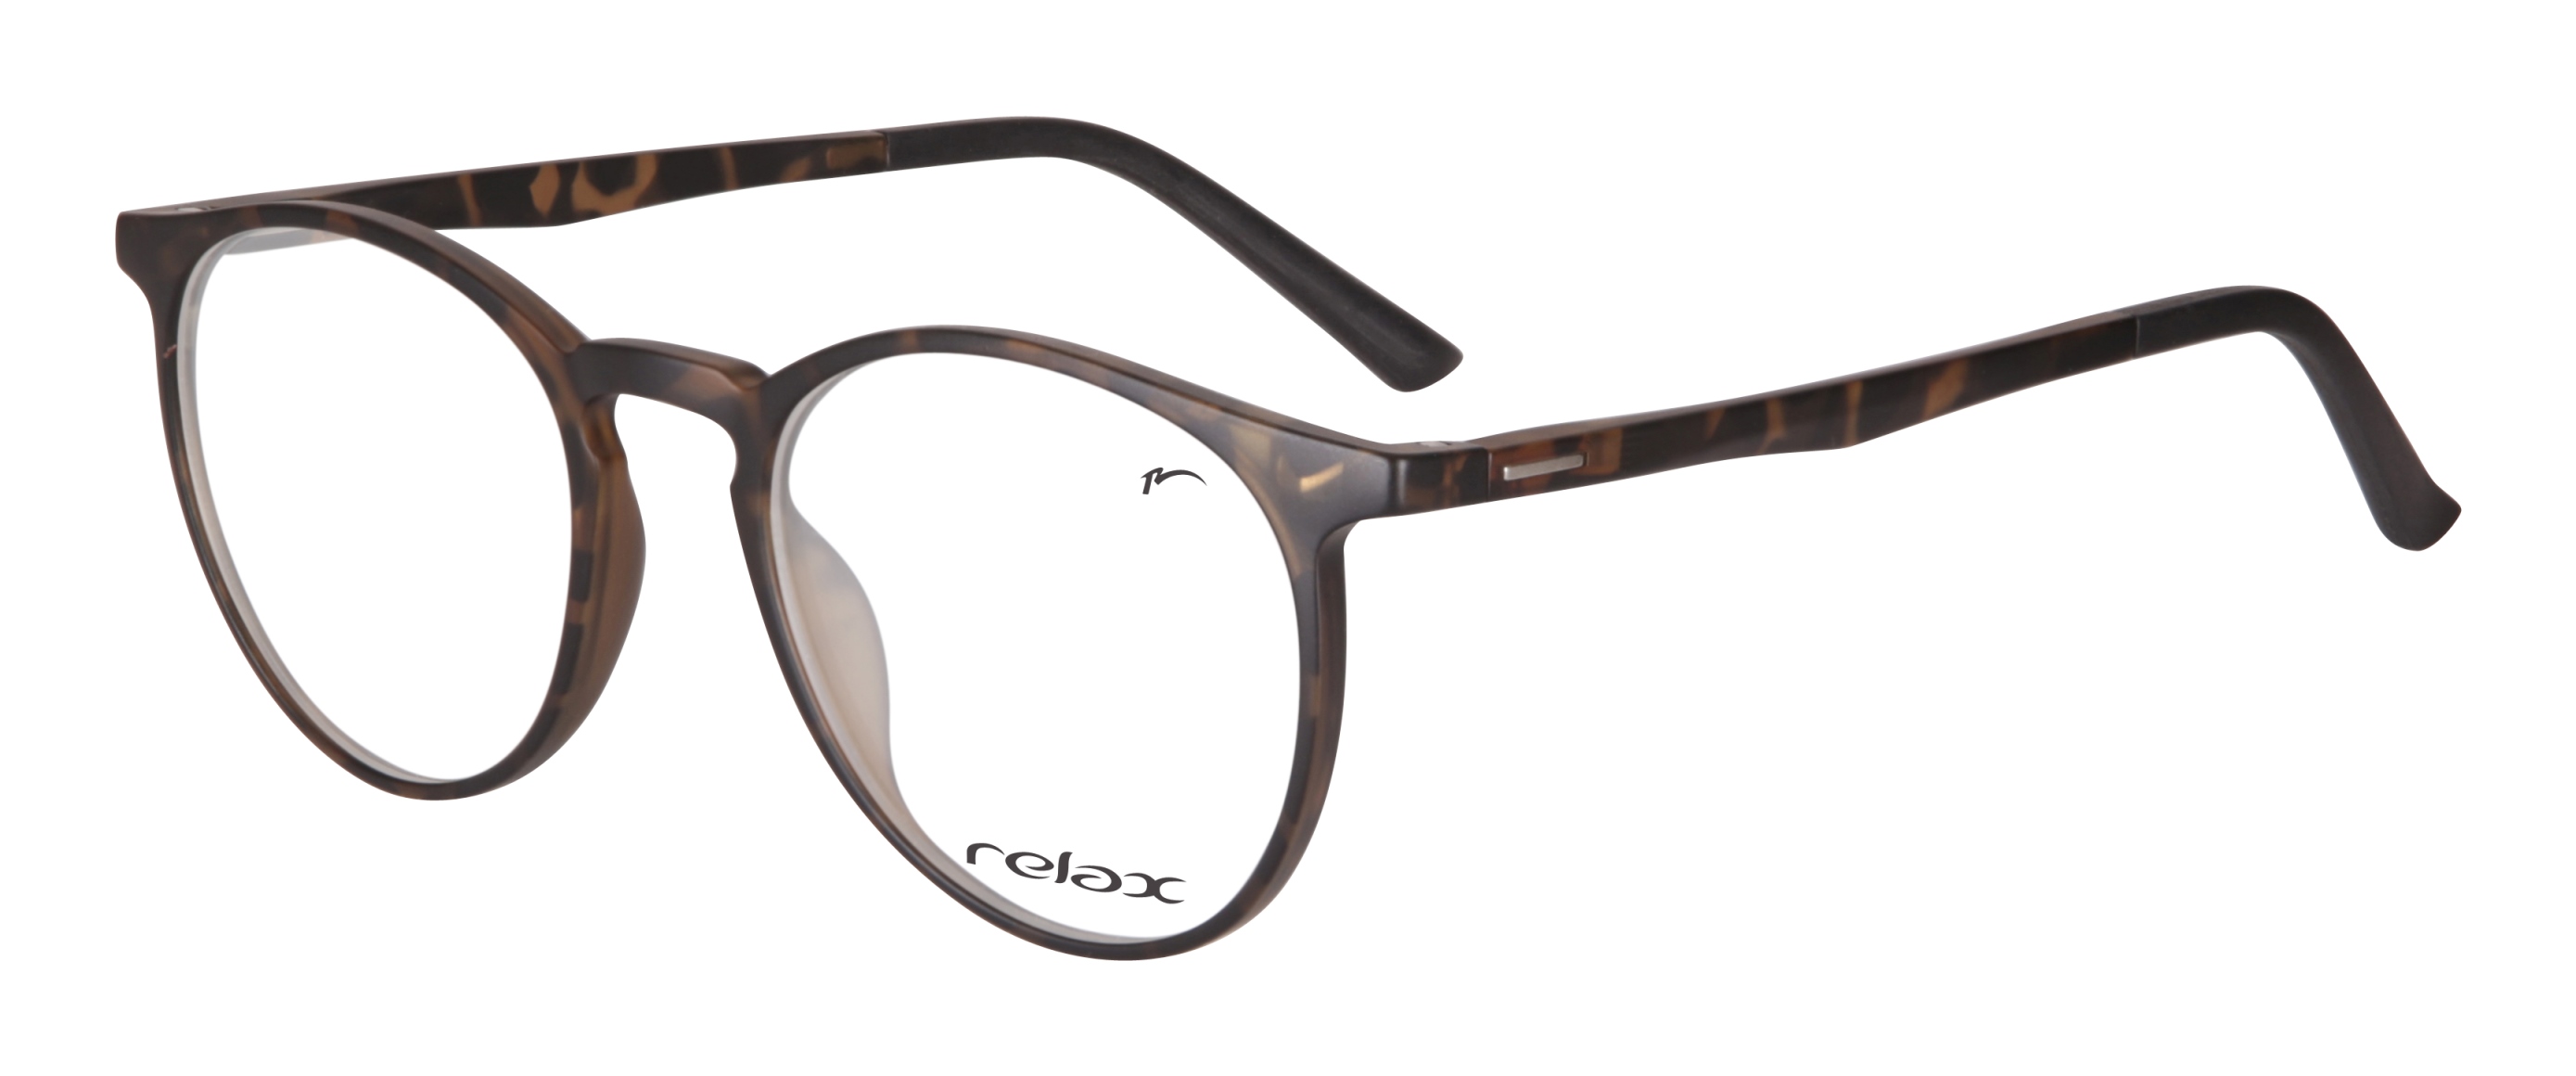 Optical frames Relax Fuzzy RM123C3